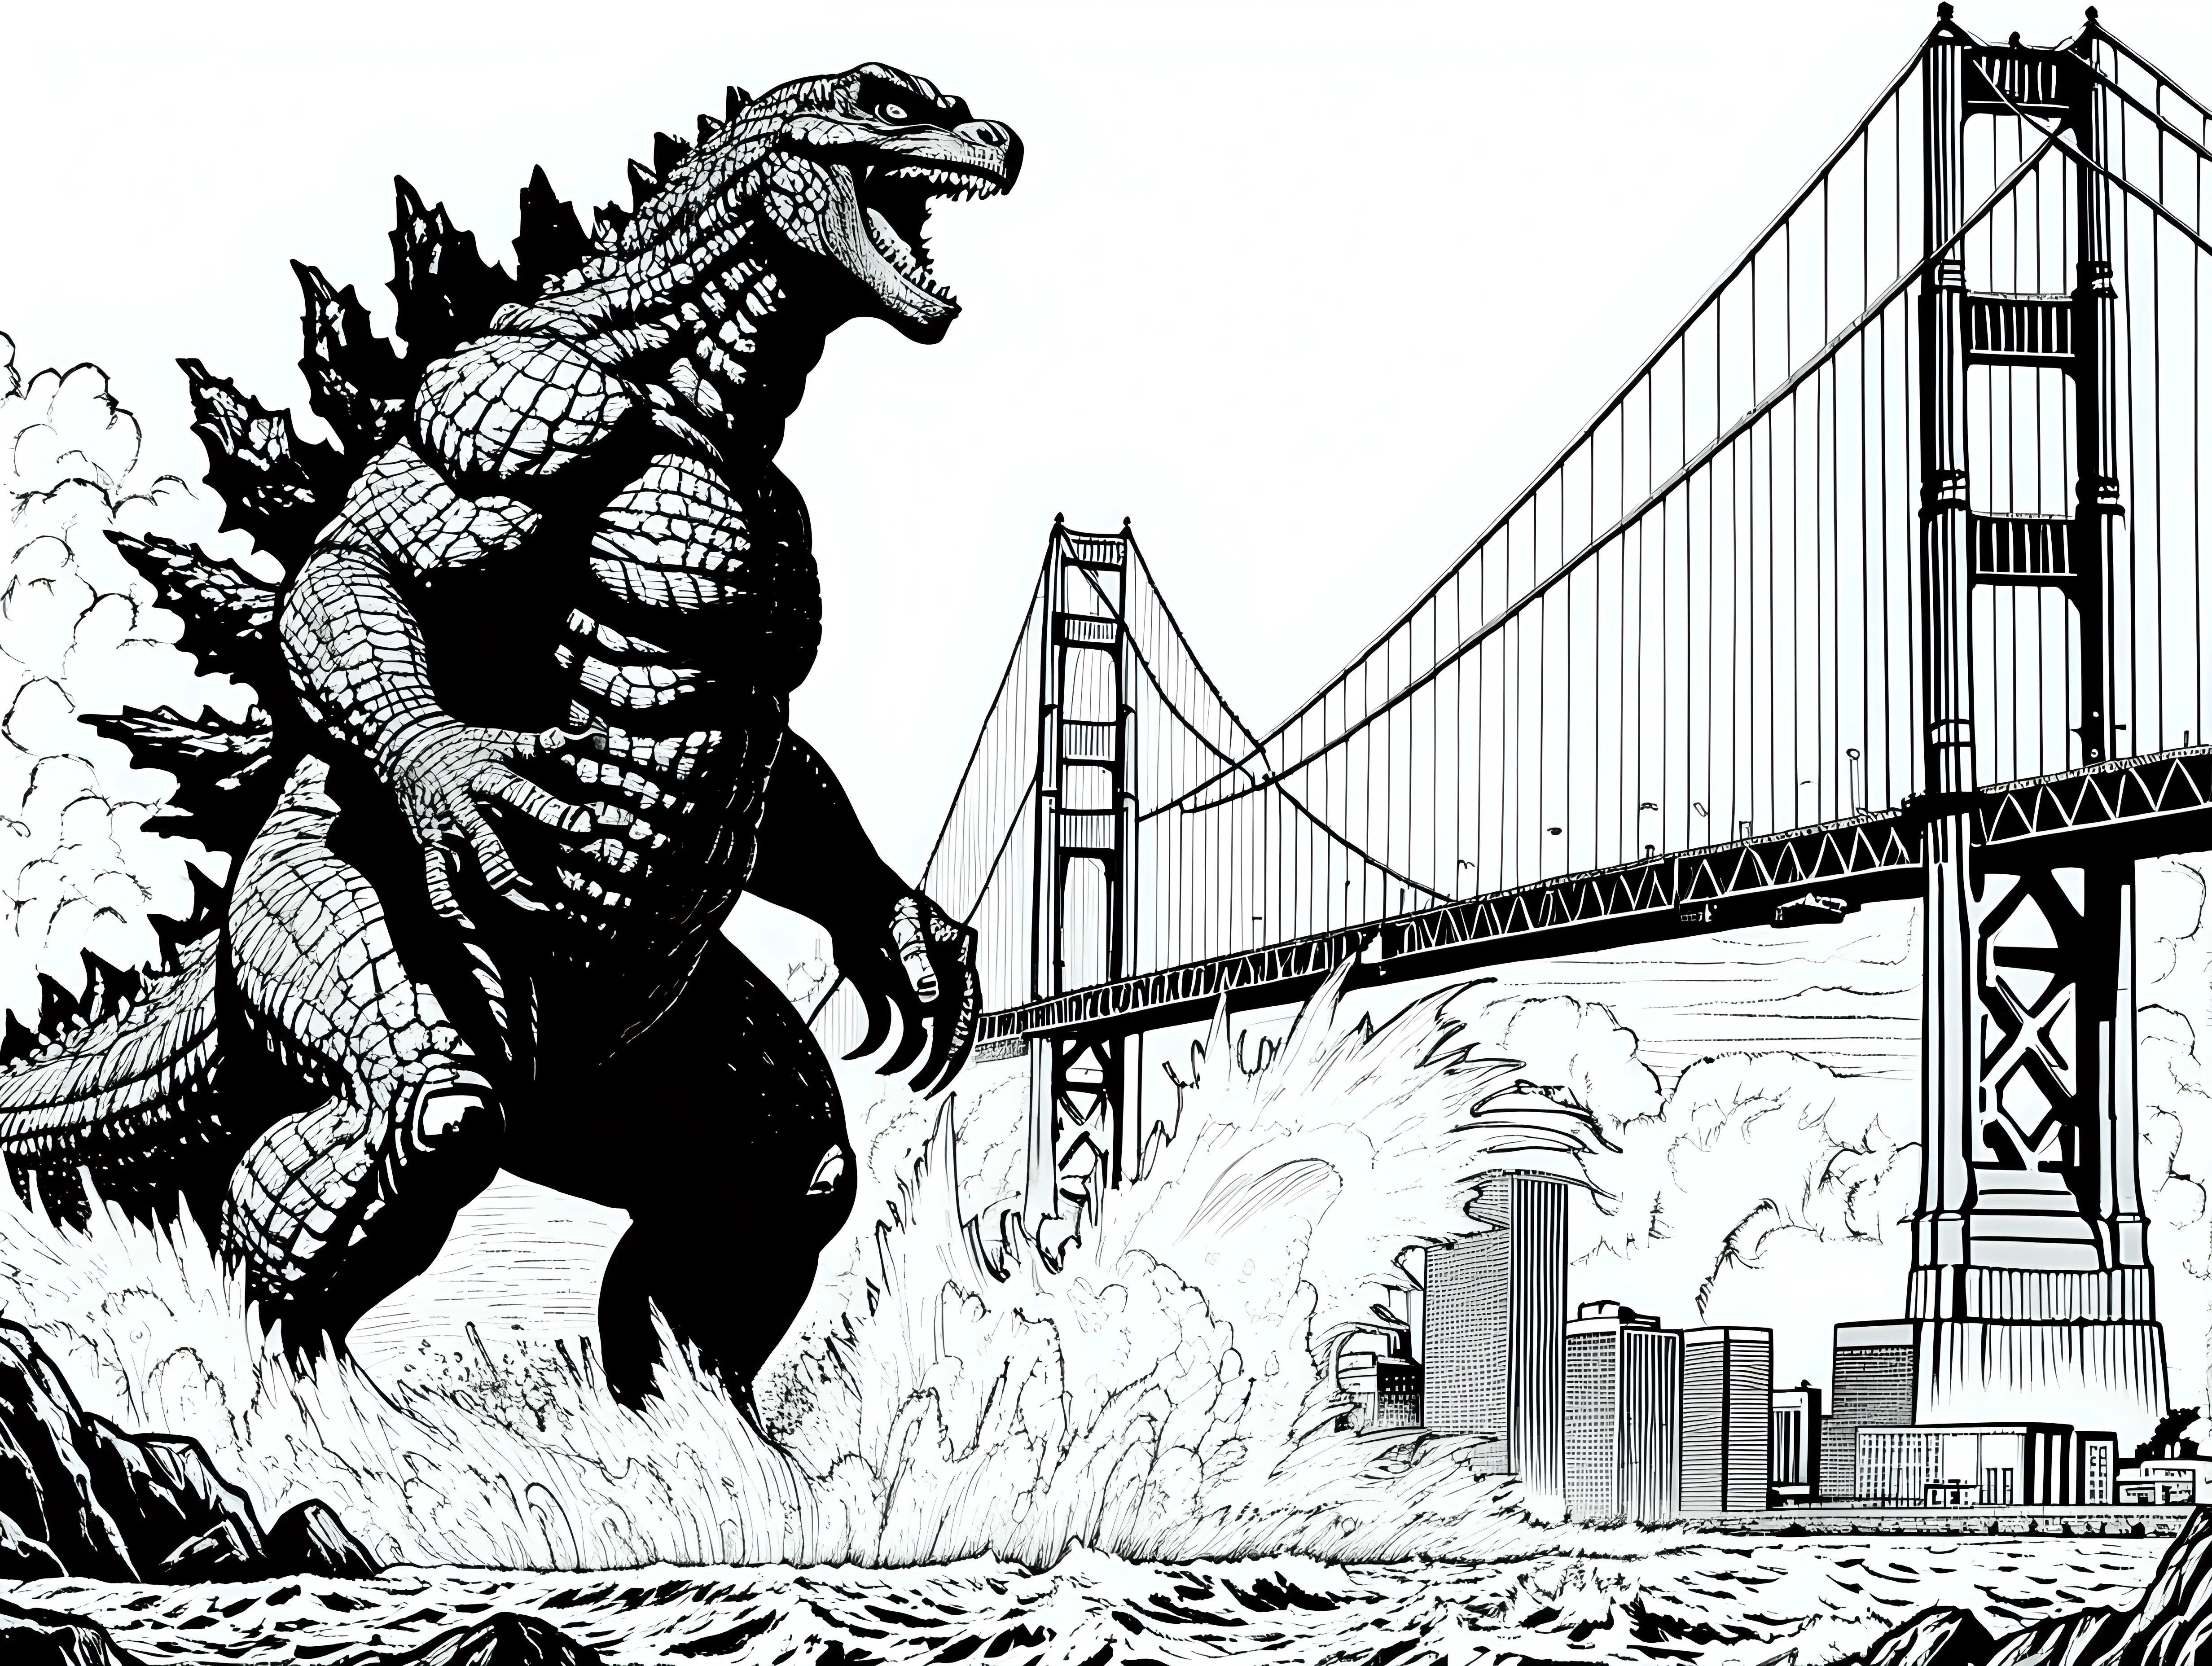 Godzilla ink line art. Comic book style. Godzilla destroying a city. Approaching the Golden Gate Bridge